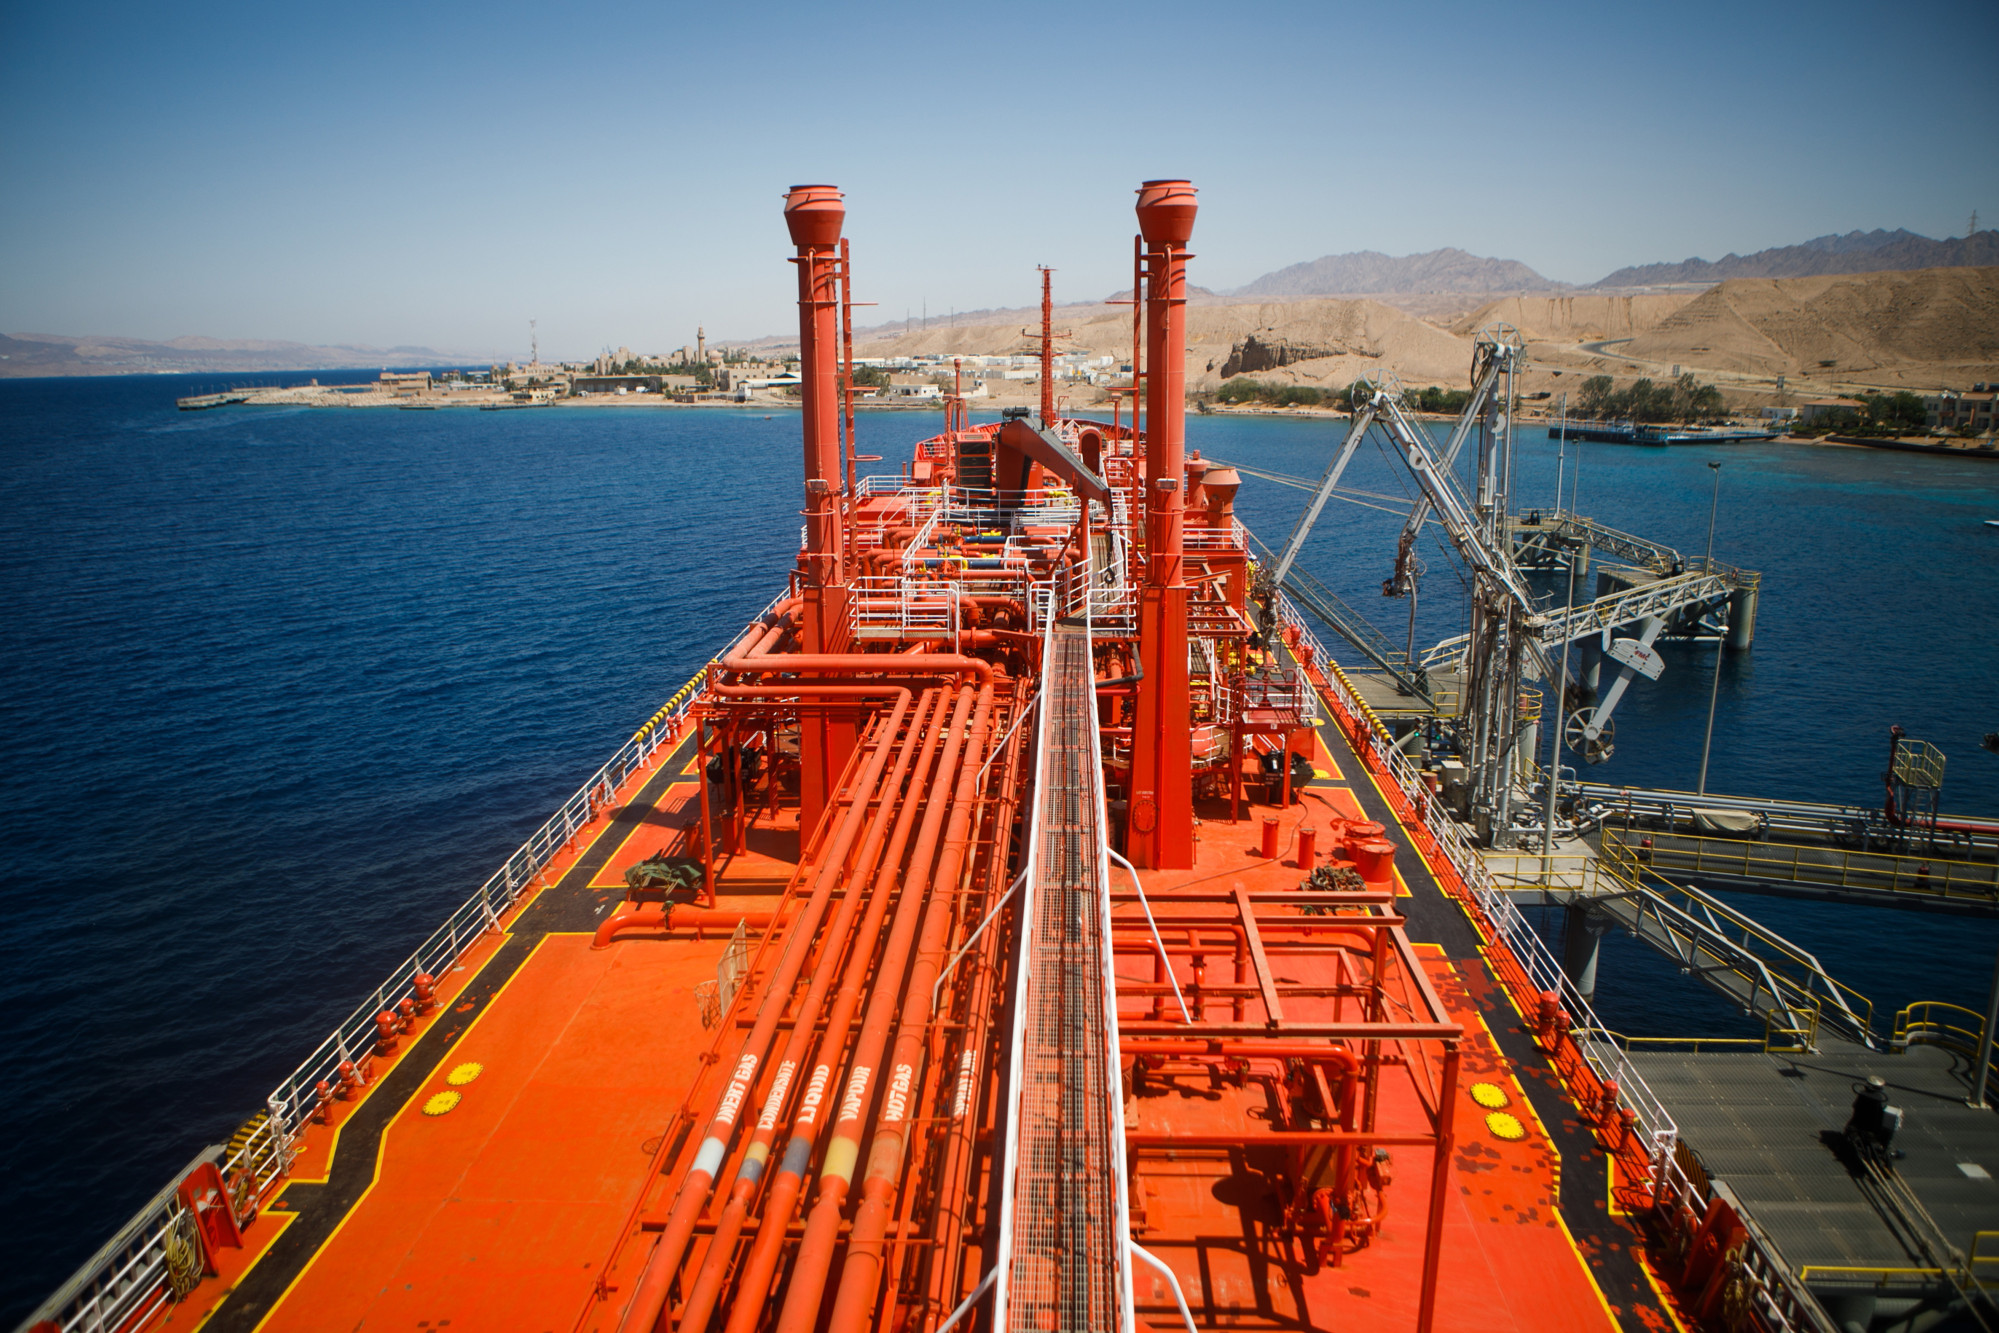 LNG And LPG Operations At Aqaba Port